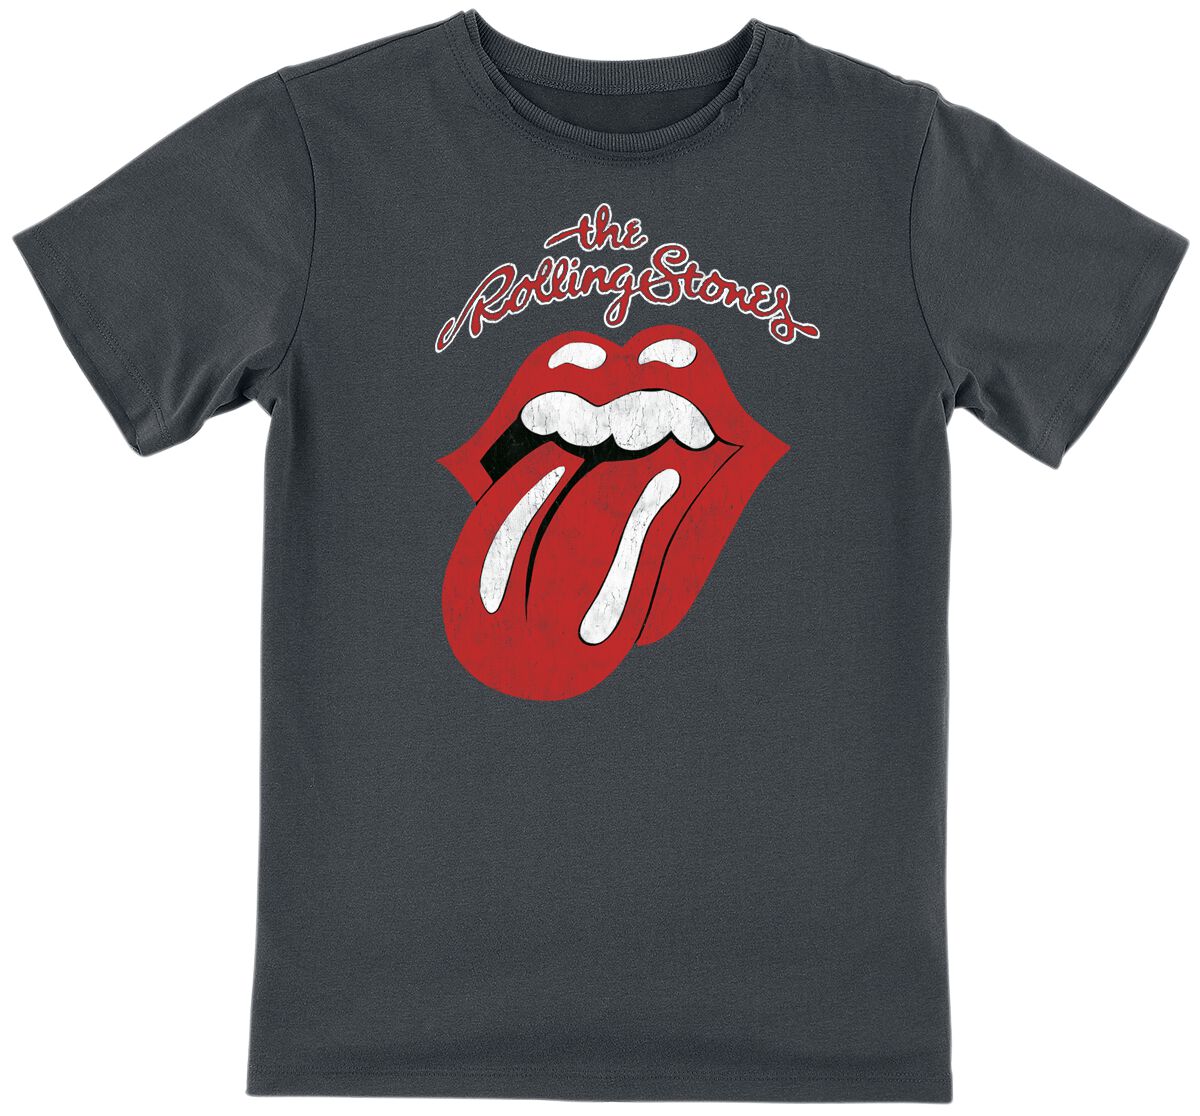 The Rolling Stones T-Shirt für Kinder - Amplified Collection - Kids - Vintage Tongue - für Mädchen & Jungen - charcoal  - Lizenziertes Merchandise! von The Rolling Stones